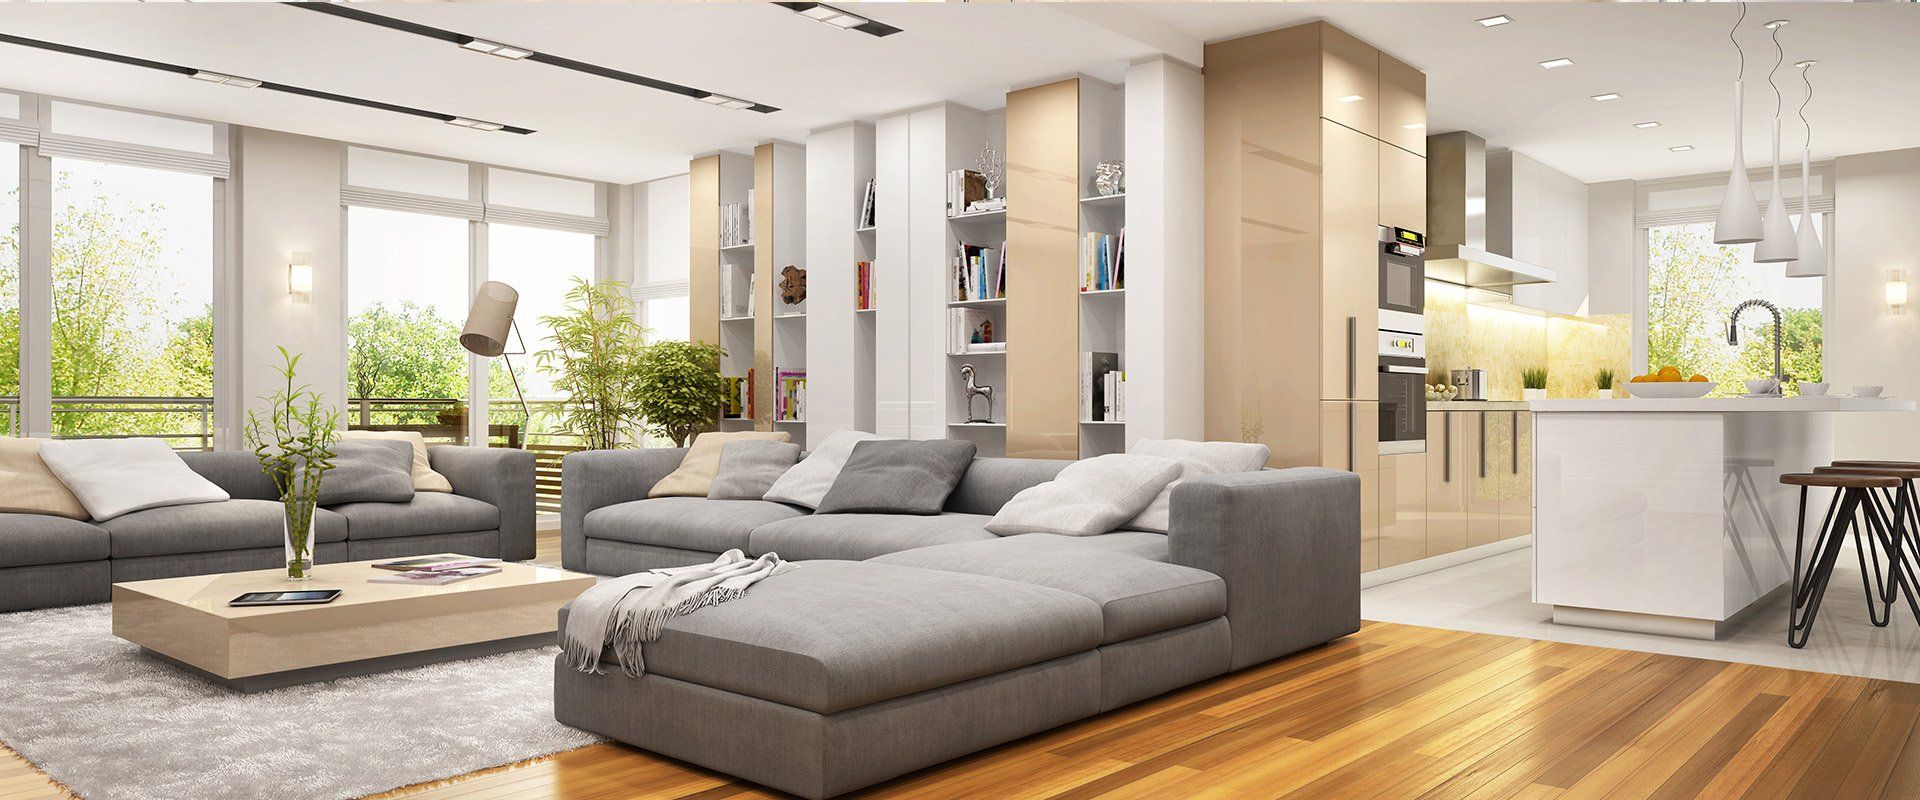 Living Area With Gray Furniture — Aurora, CO — Silva Construction